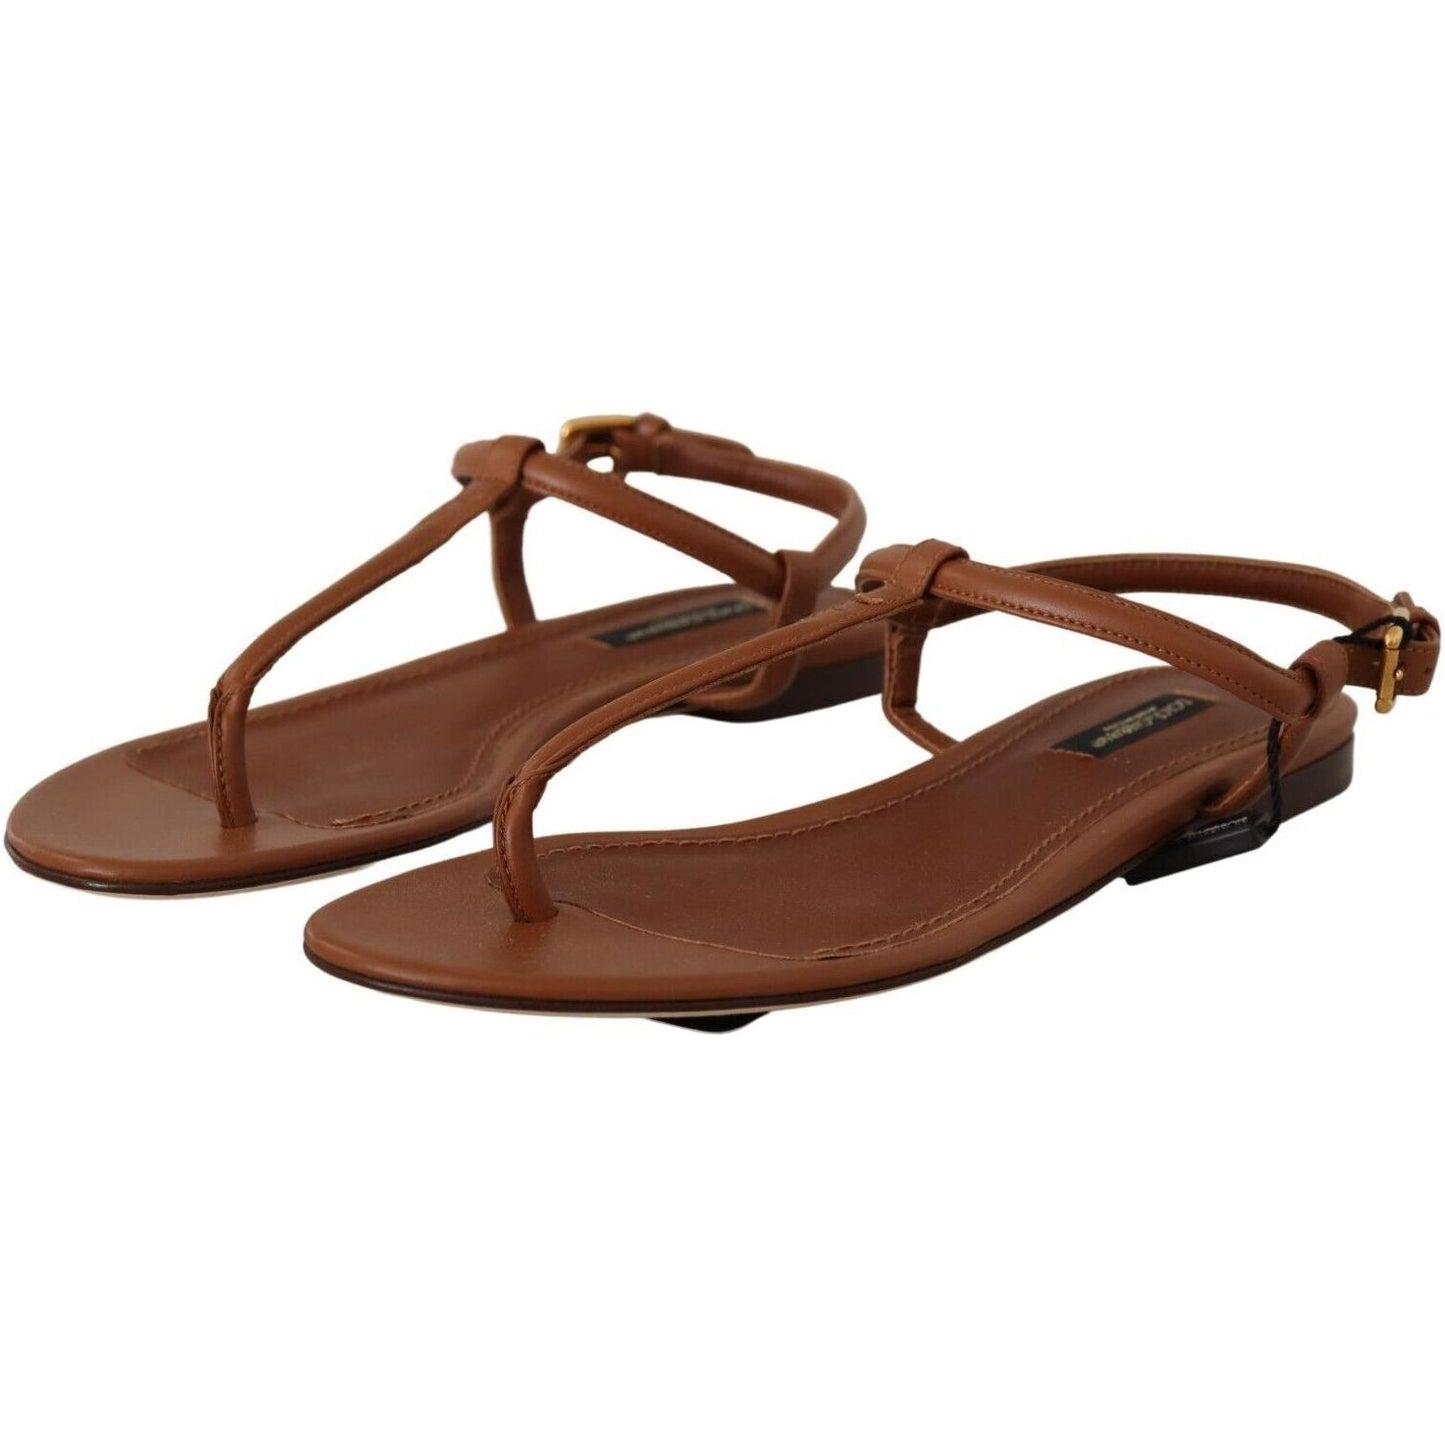 Dolce & Gabbana Elegant Leather T-Strap Flat Sandals brown-leather-t-strap-slides-flats-sandals-shoes s-l1600-37-17-f761e4bc-afc.jpg